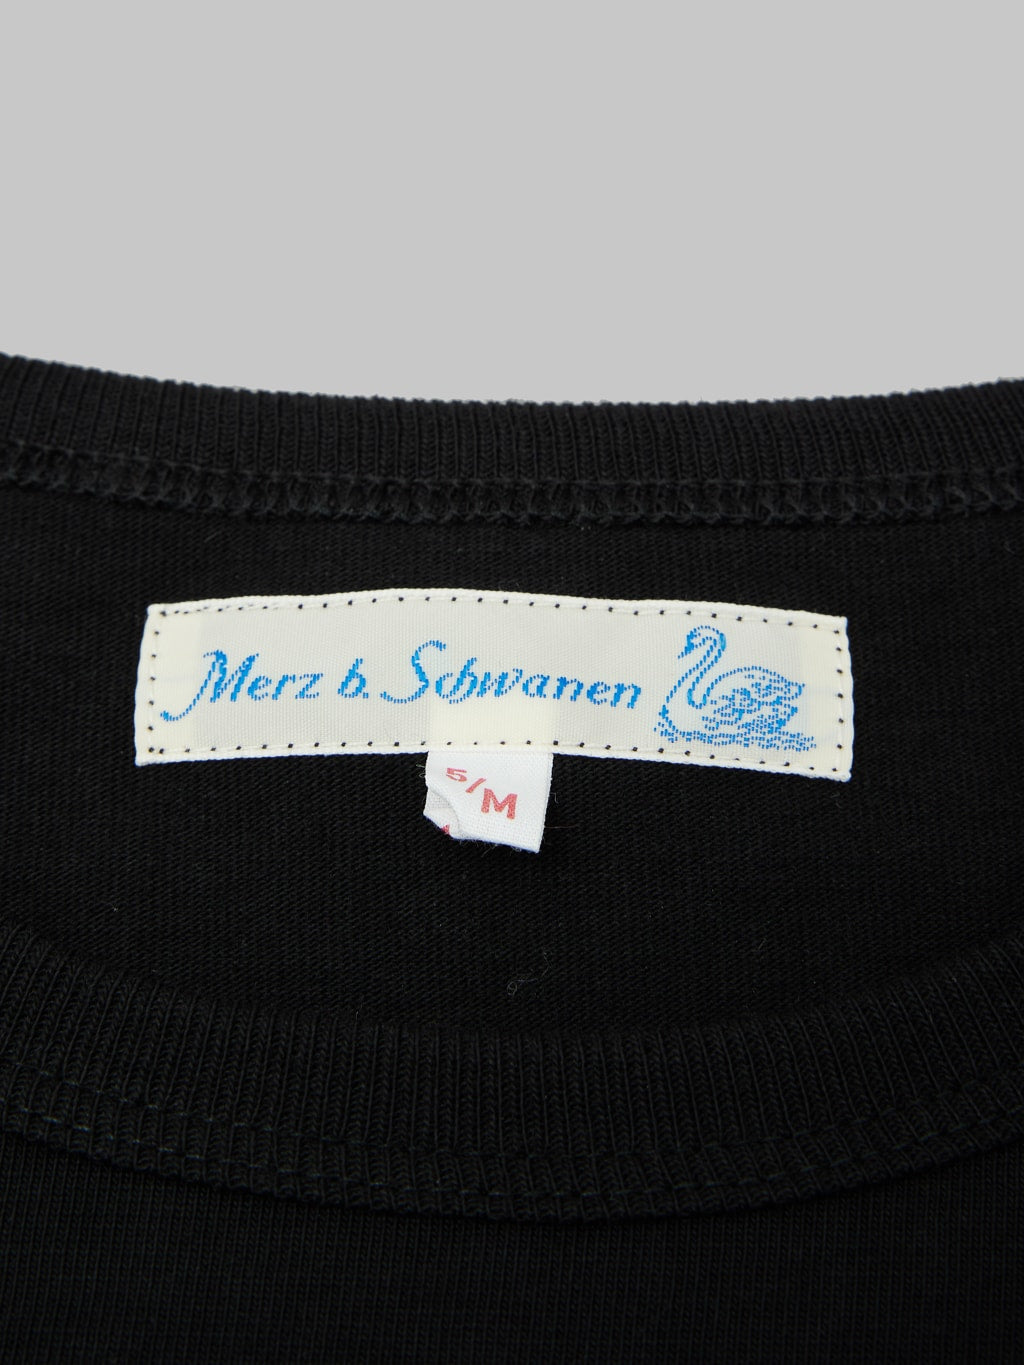 merz b schwanen good originals loopwheeled Tshirt classic fit black size label